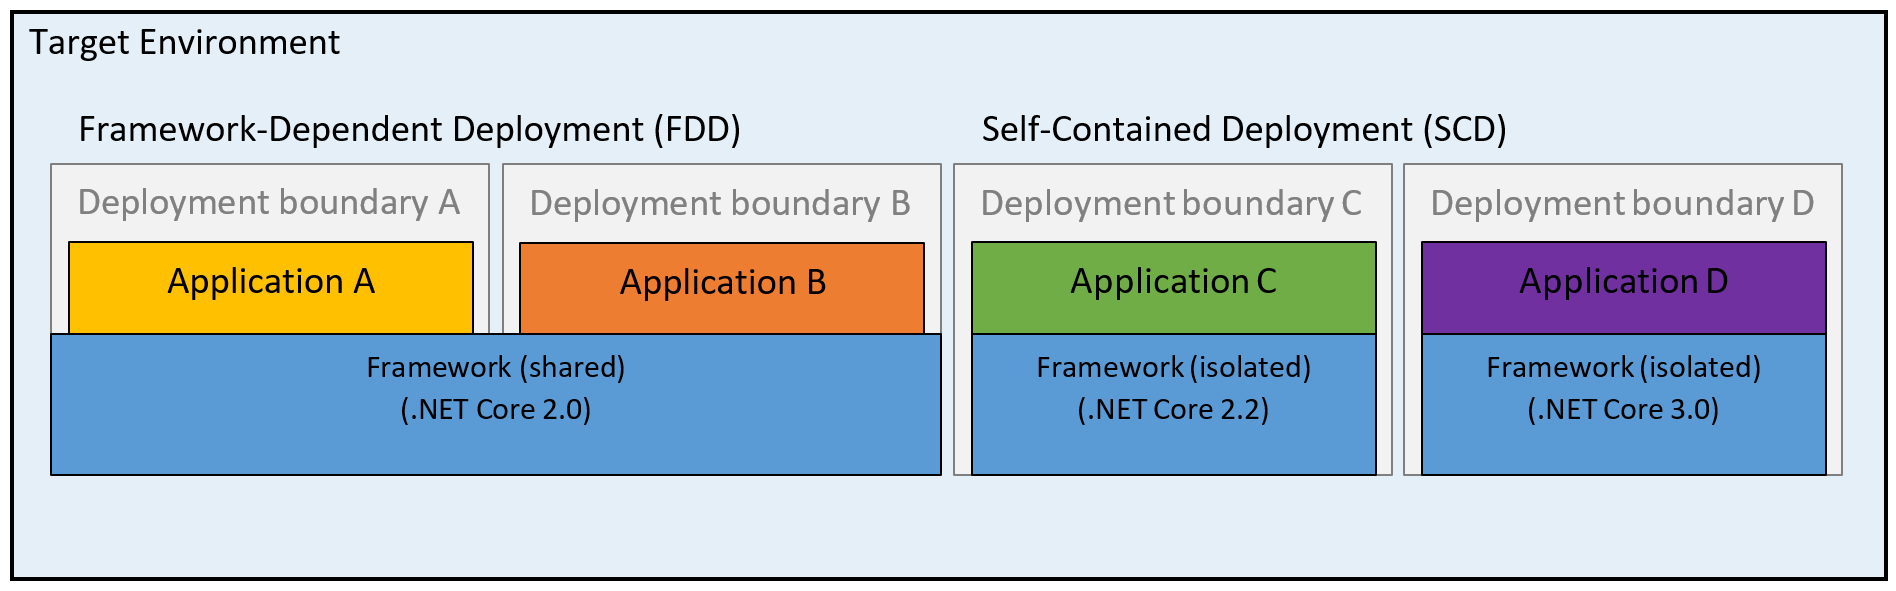 framework-deployment-models